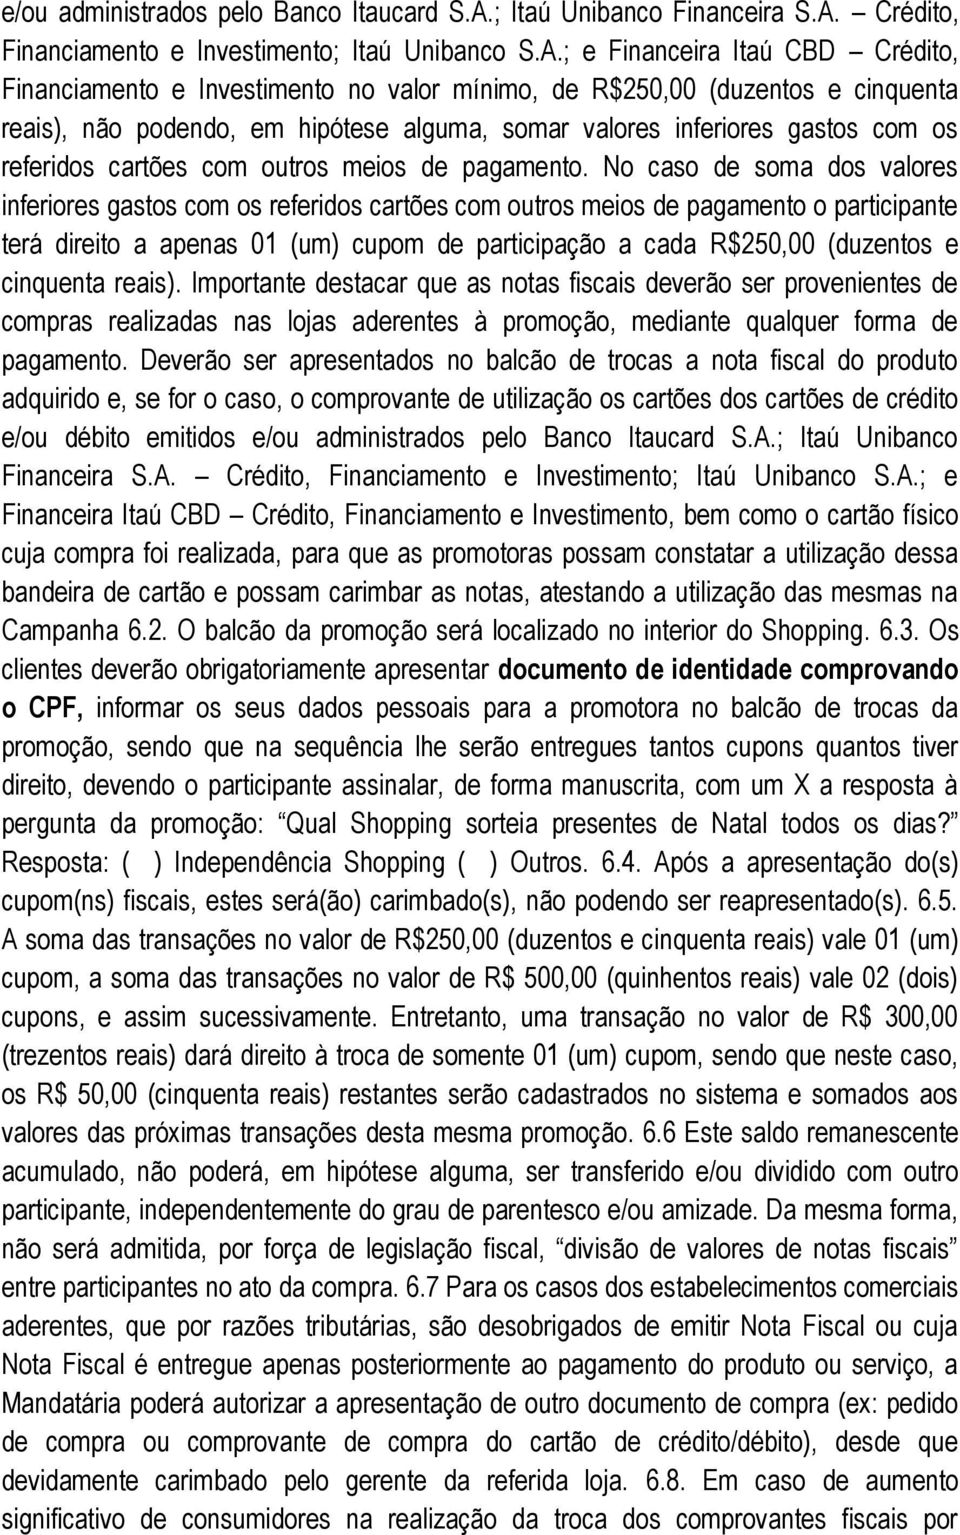 Crédito, Financiamento e Investimento; Itaú Unibanco S.A.